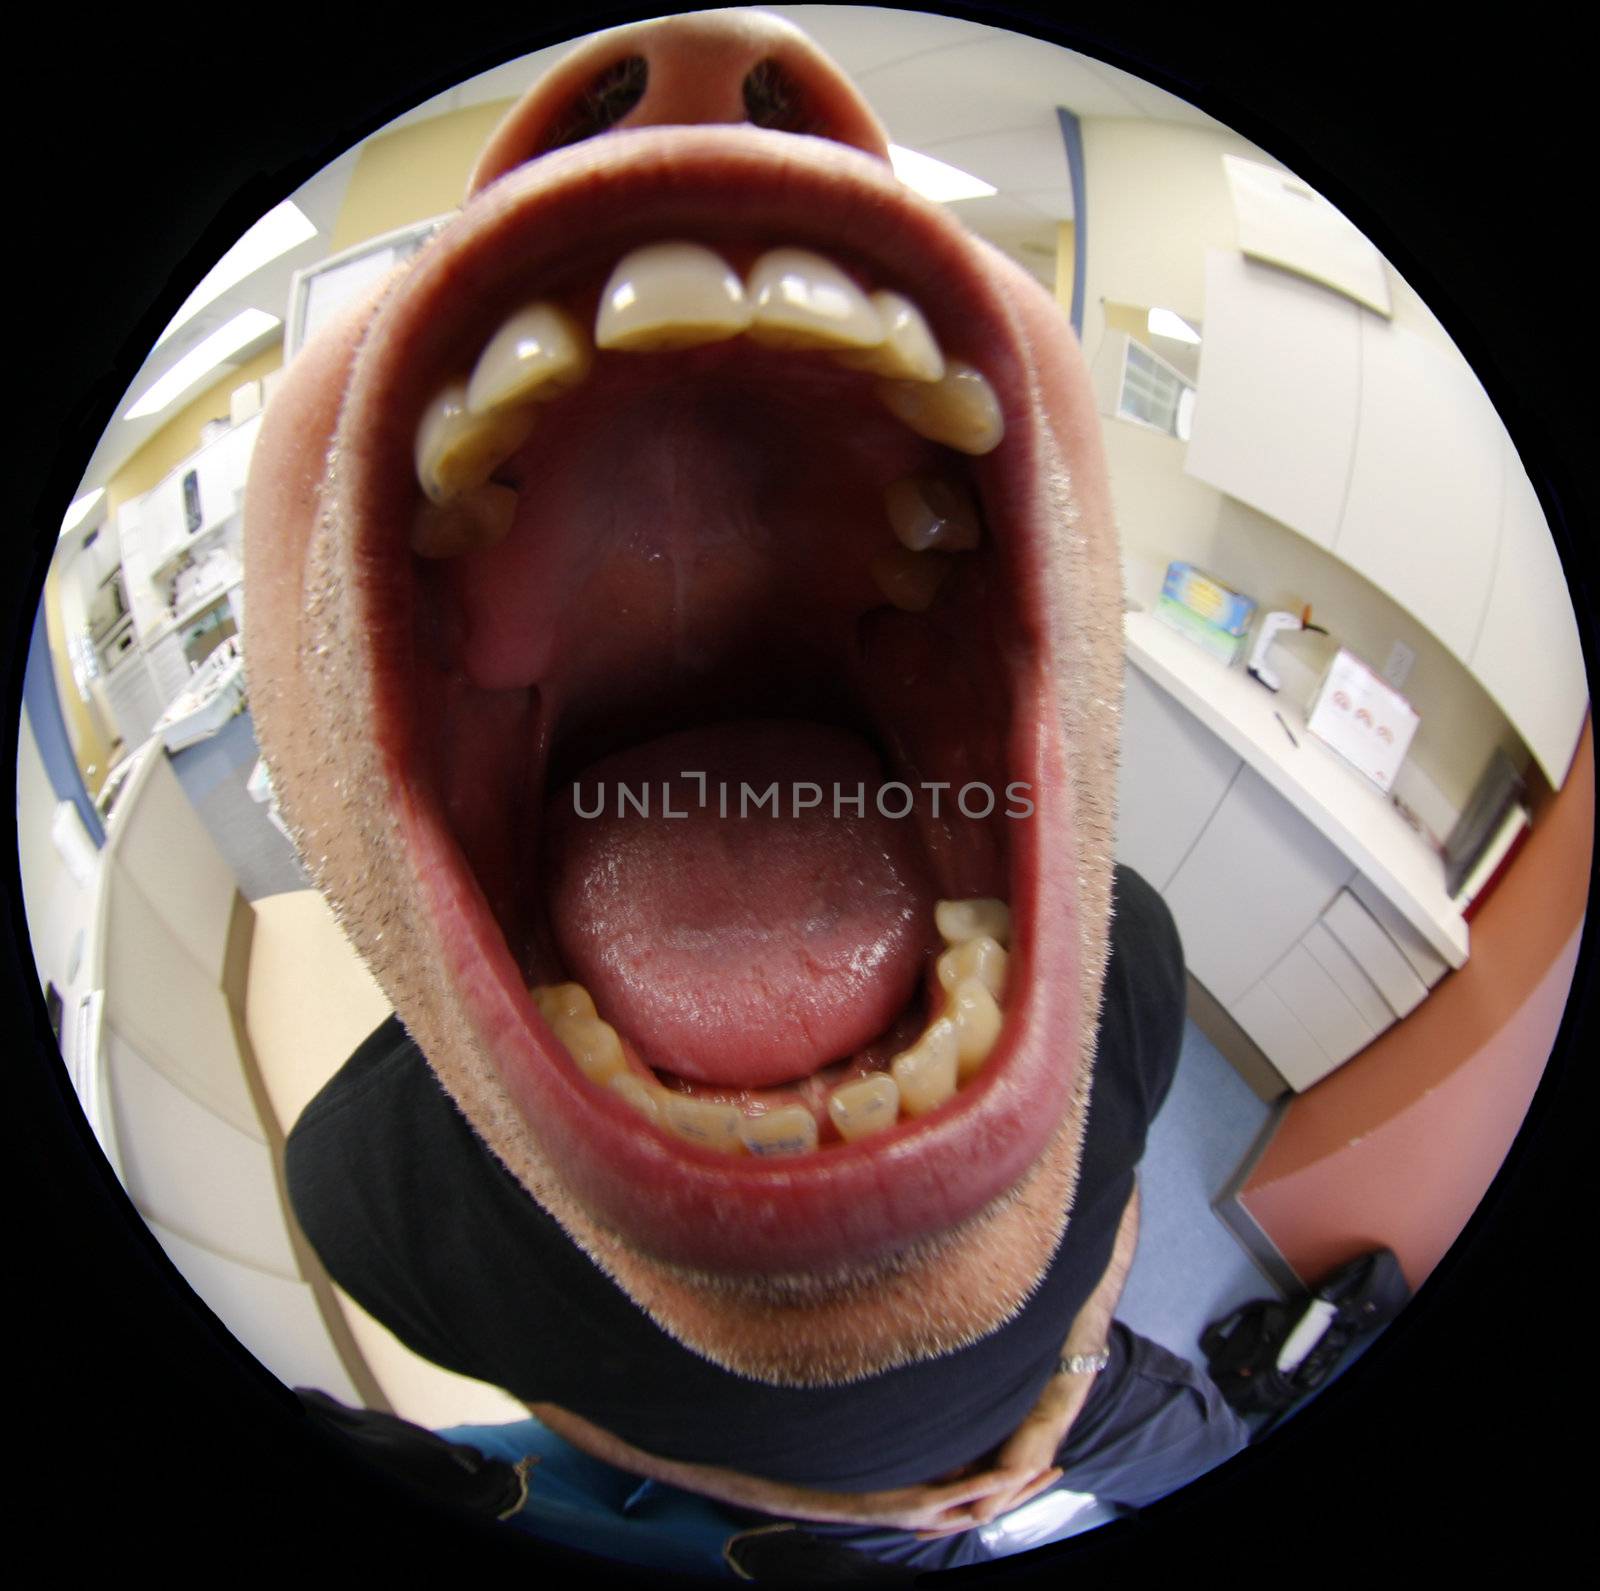 At the dentist by Imagecom